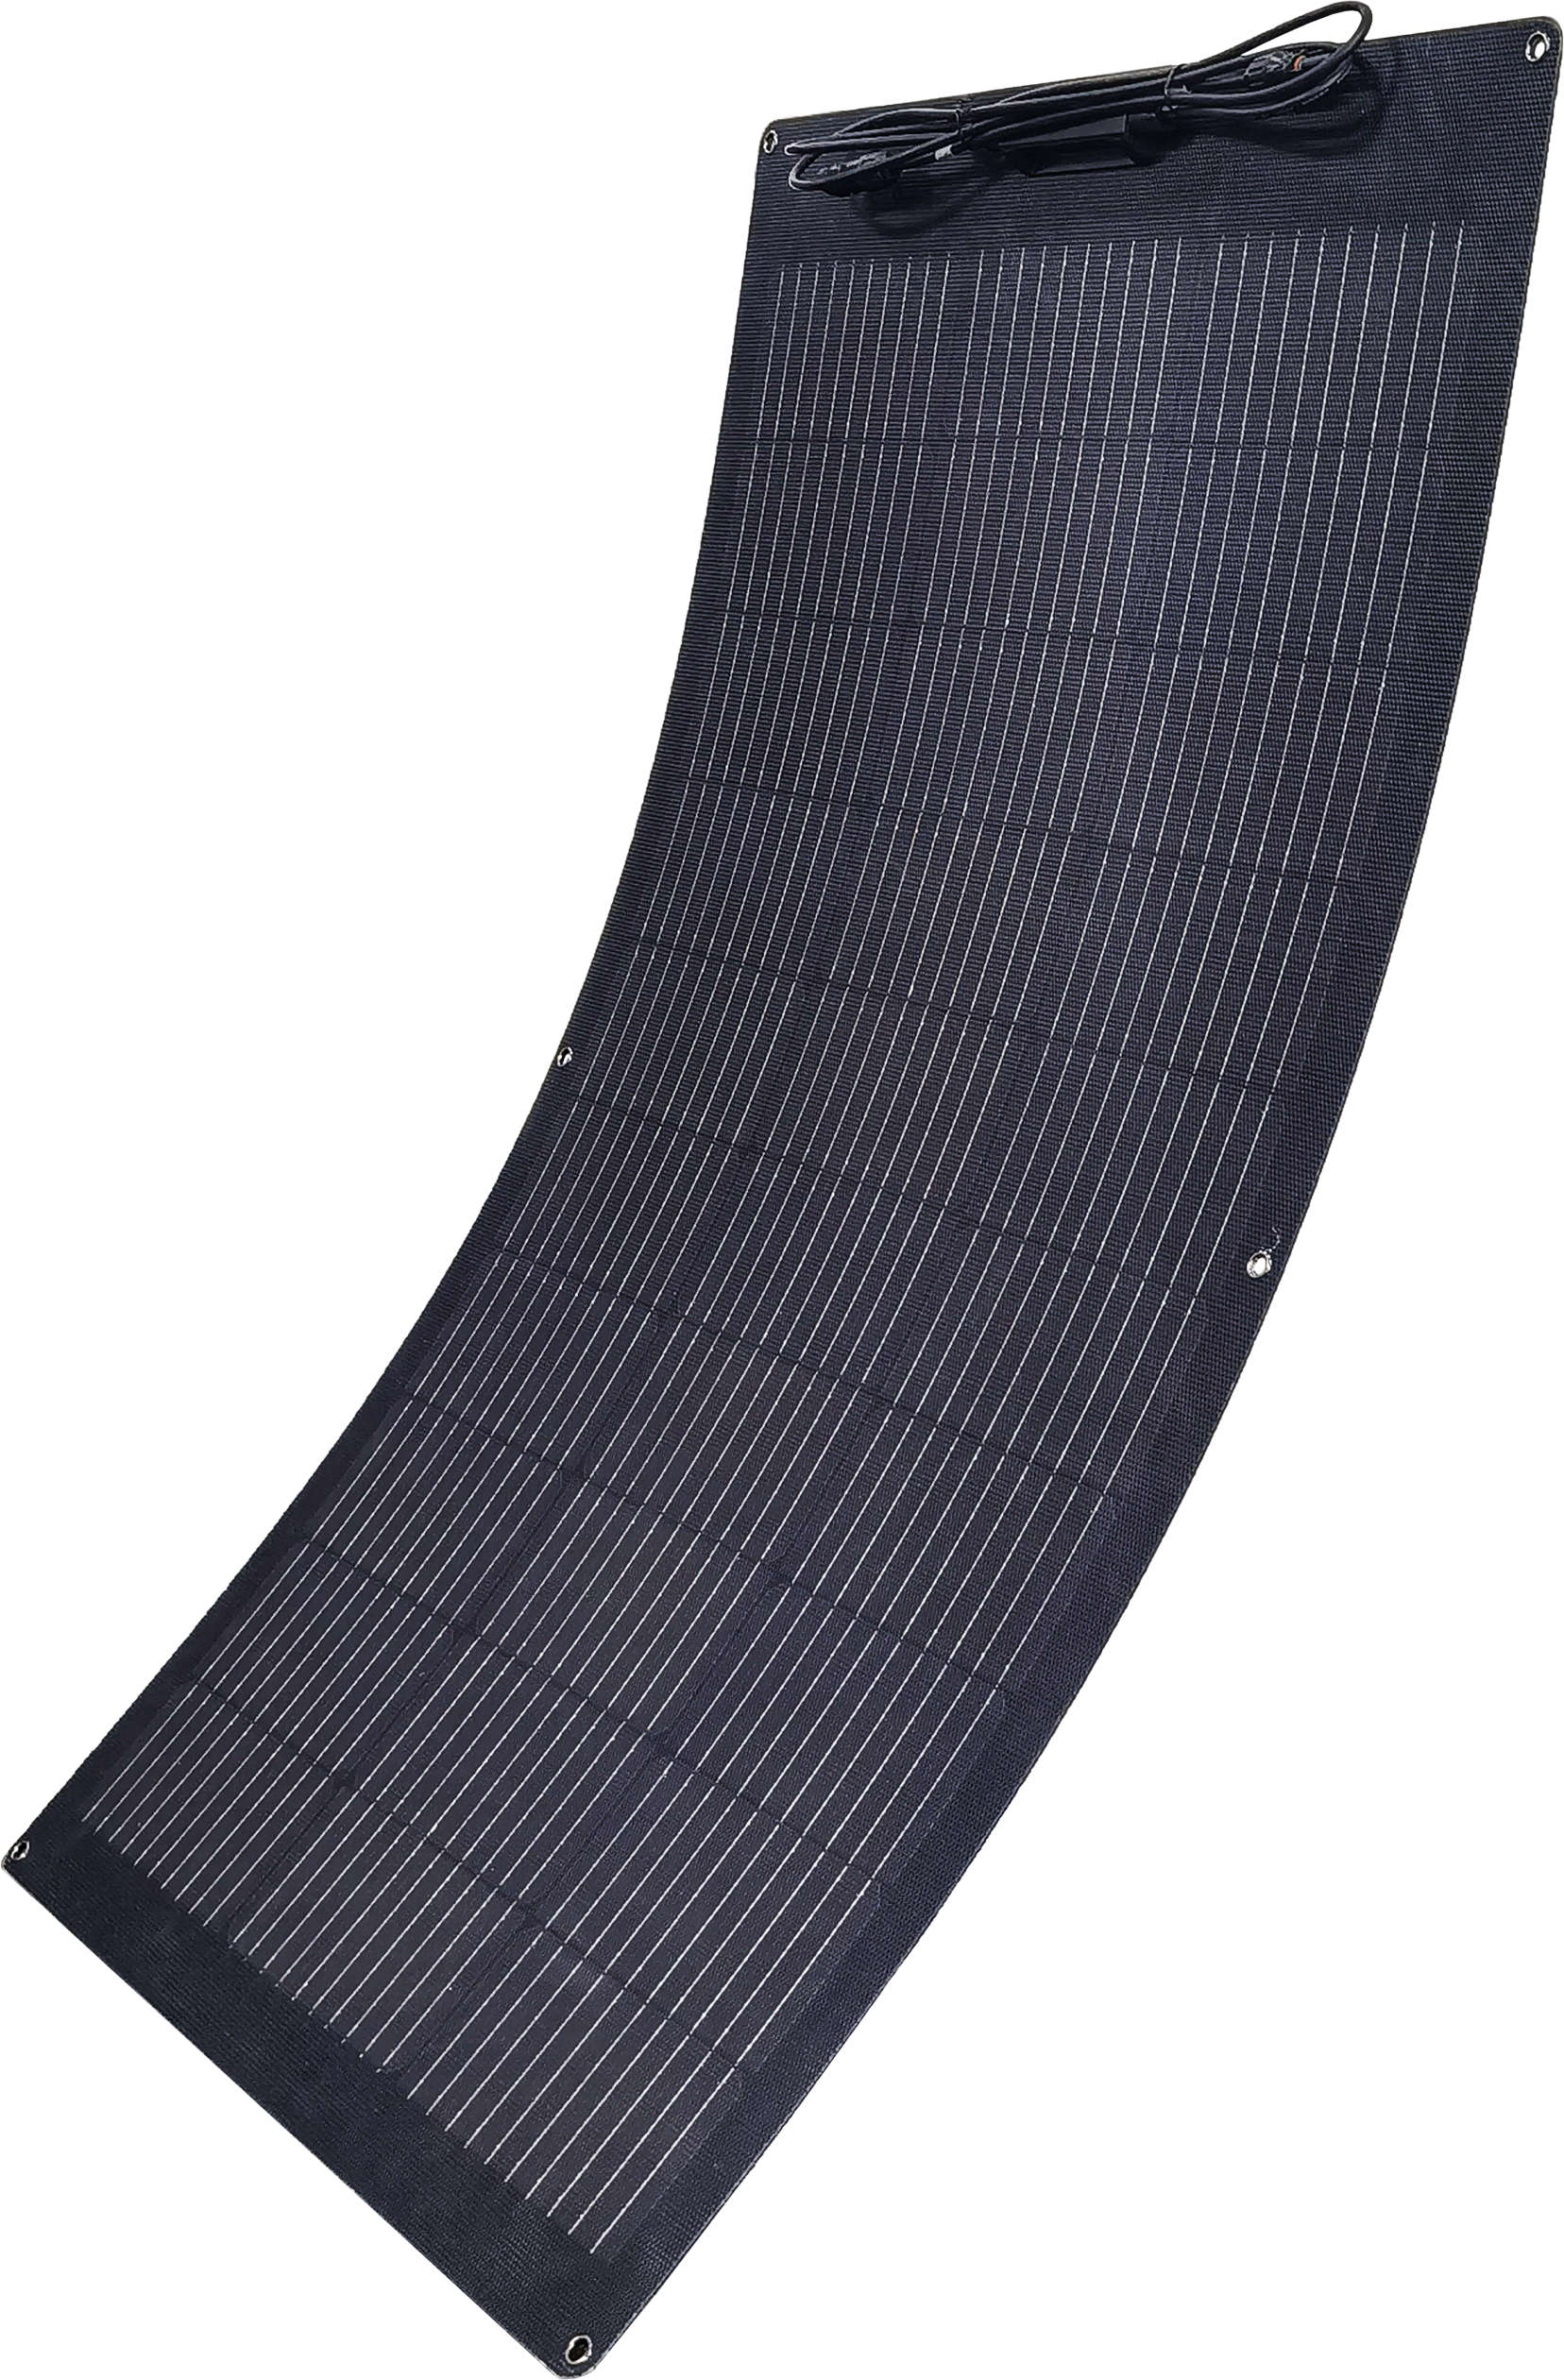 Flexible Solar Panel, Flexible Solar Panel for Yachts, Bendable Solar Panel